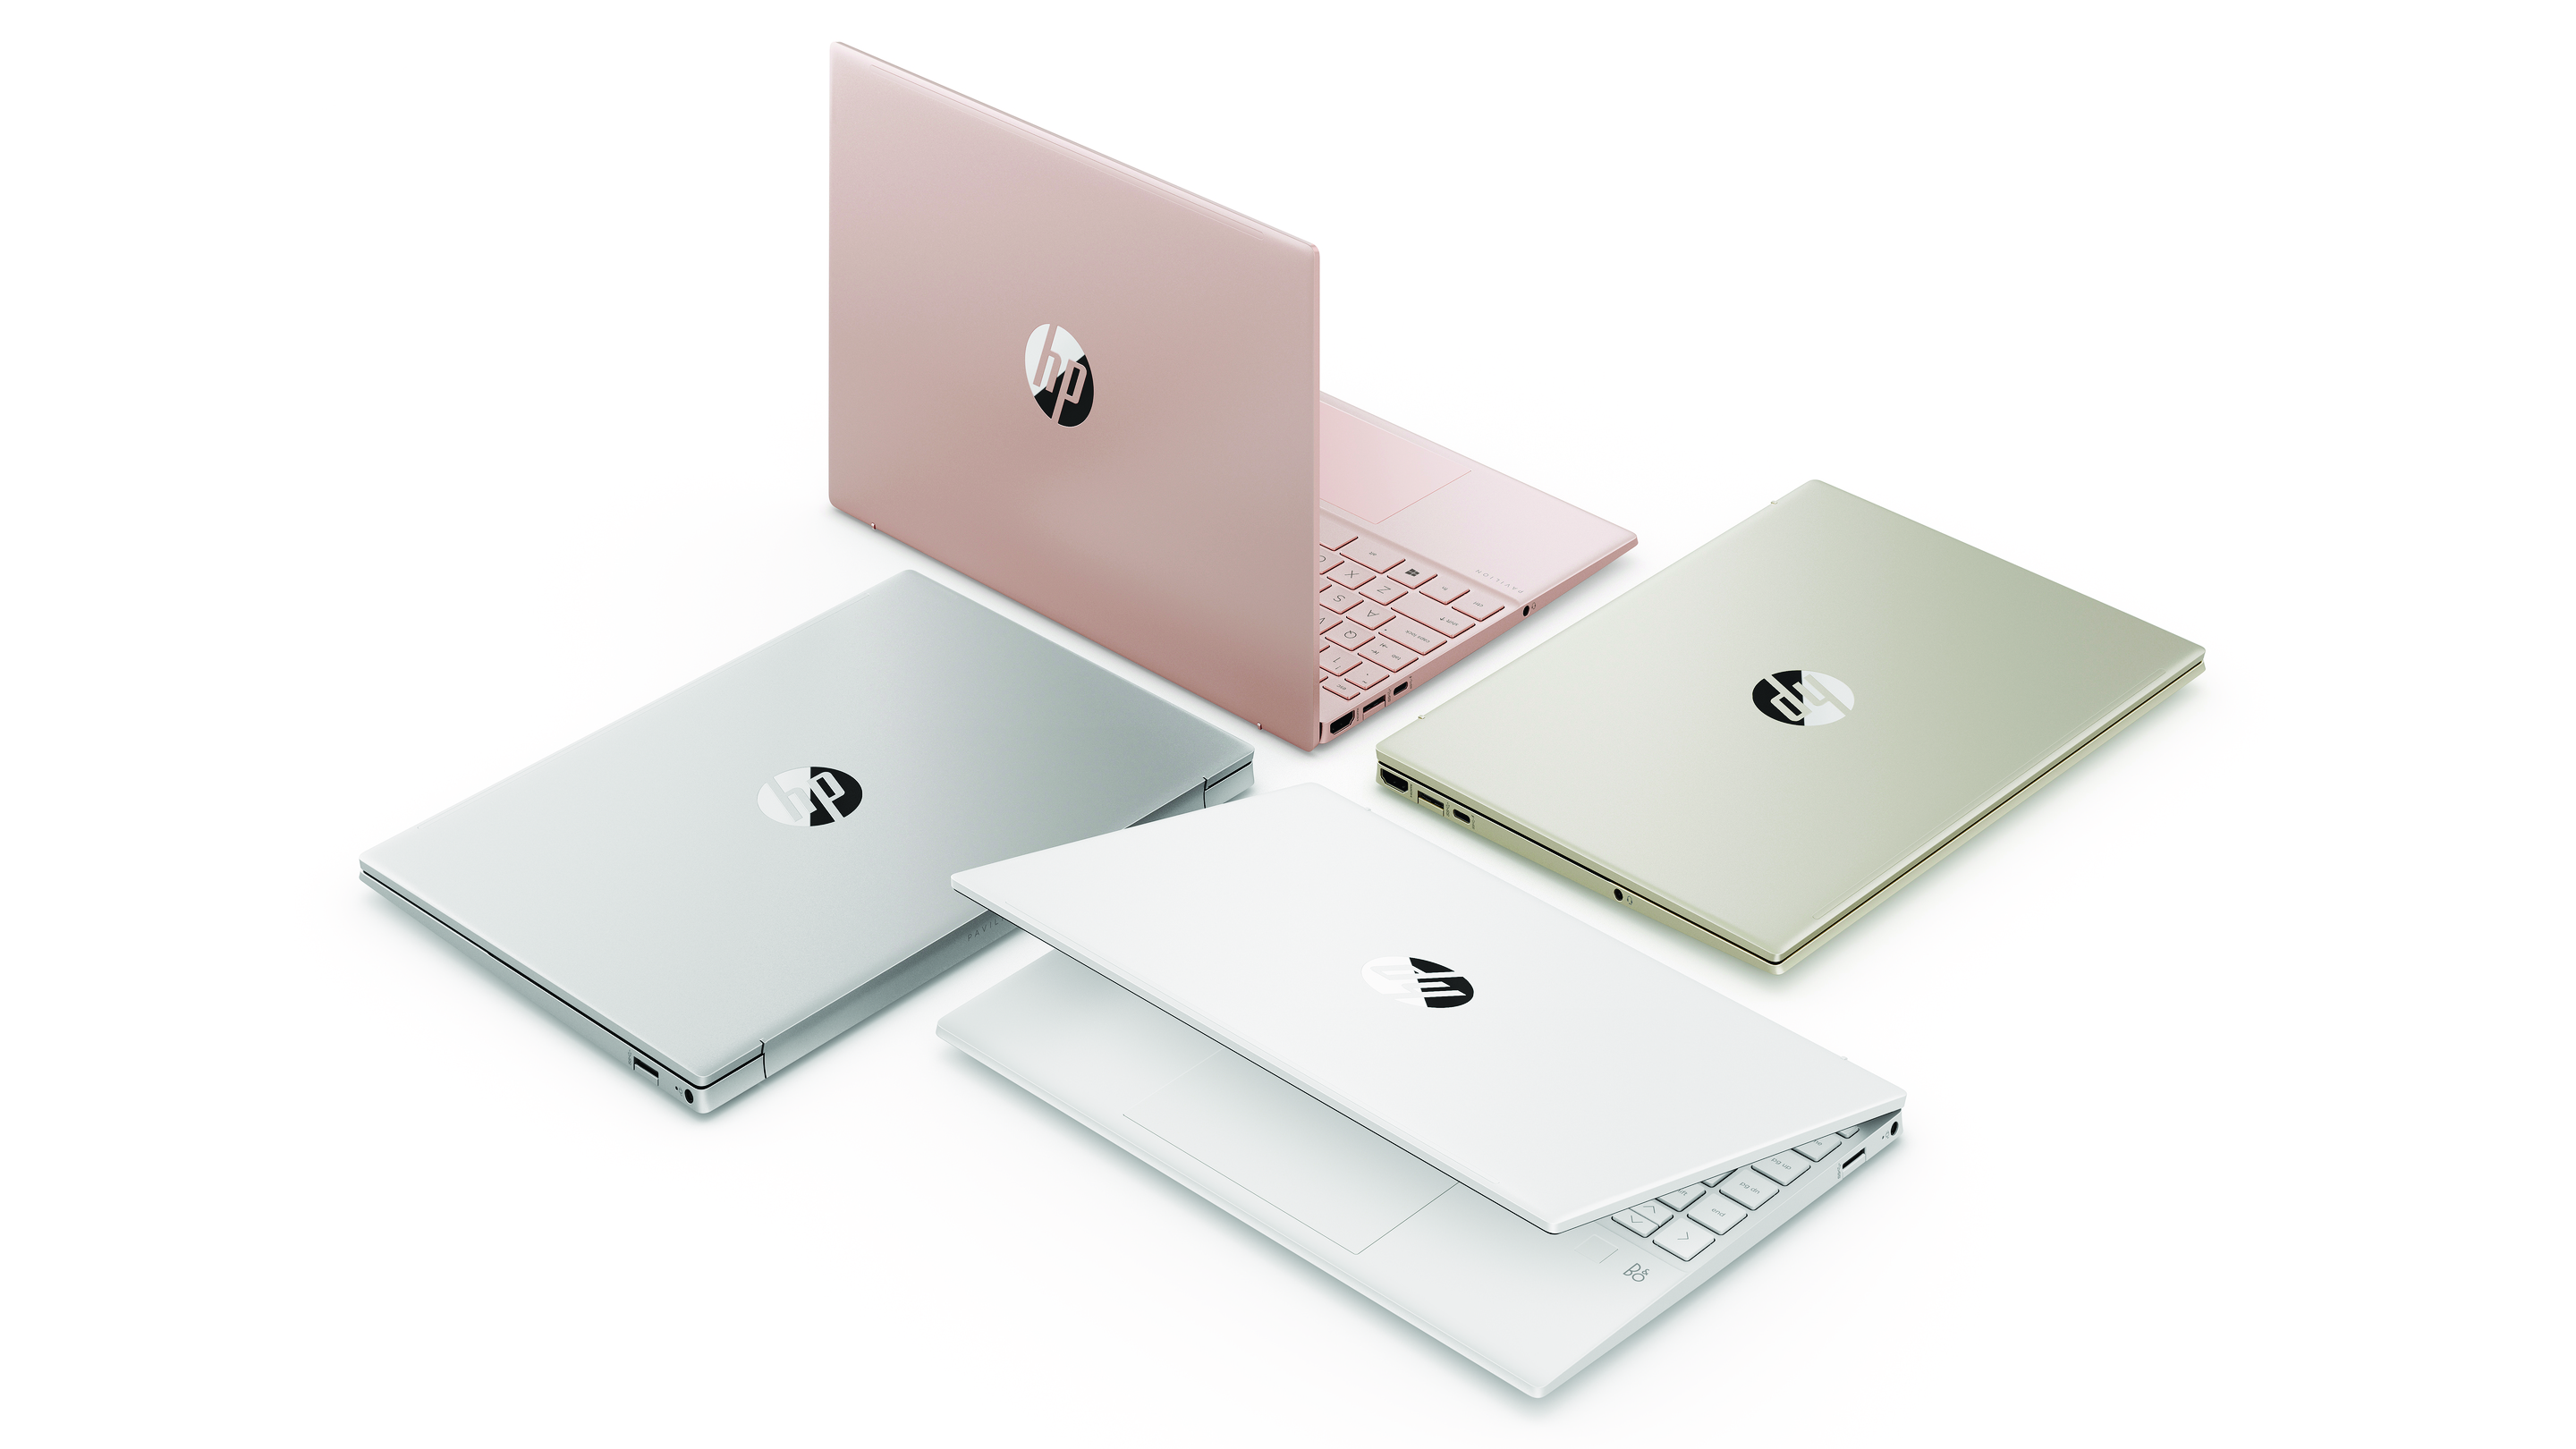 HP Pavilion Aero 13 laptops in four colors